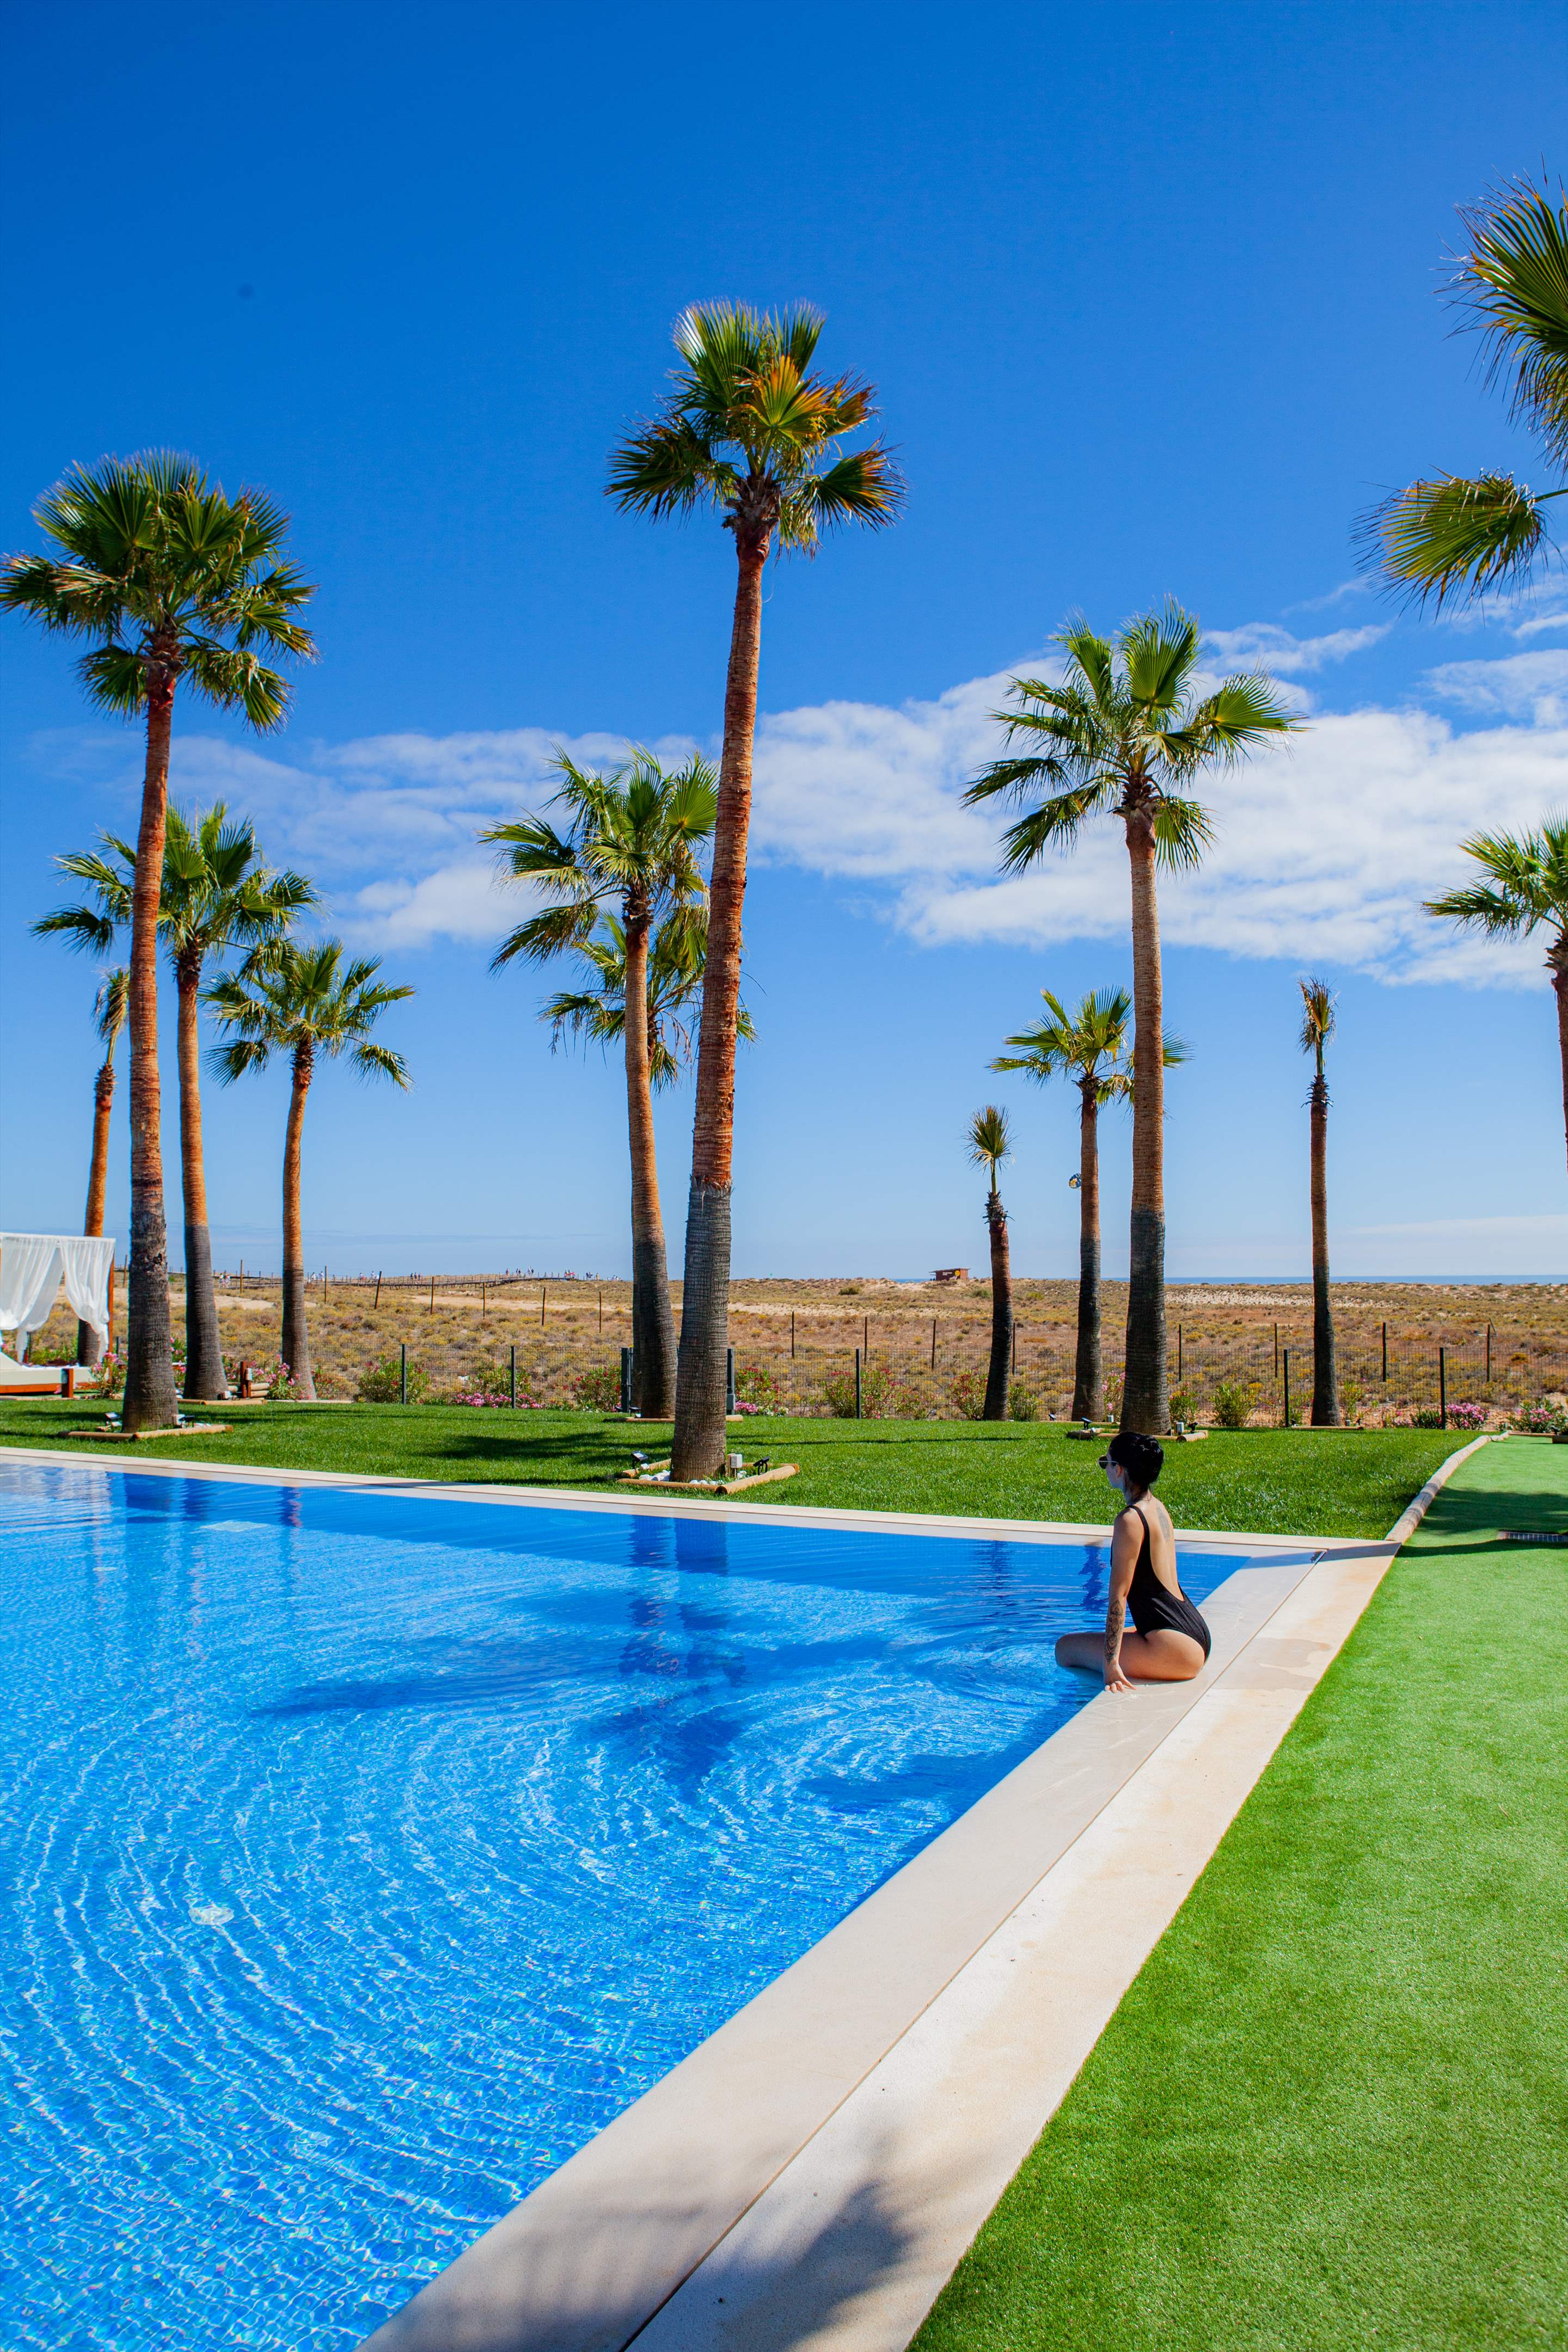 Vidamar Hotel Superior Pool View Room,HB,, Family Room, 1 bedroom hotel in Vidamar Resort, Algarve Photo #51